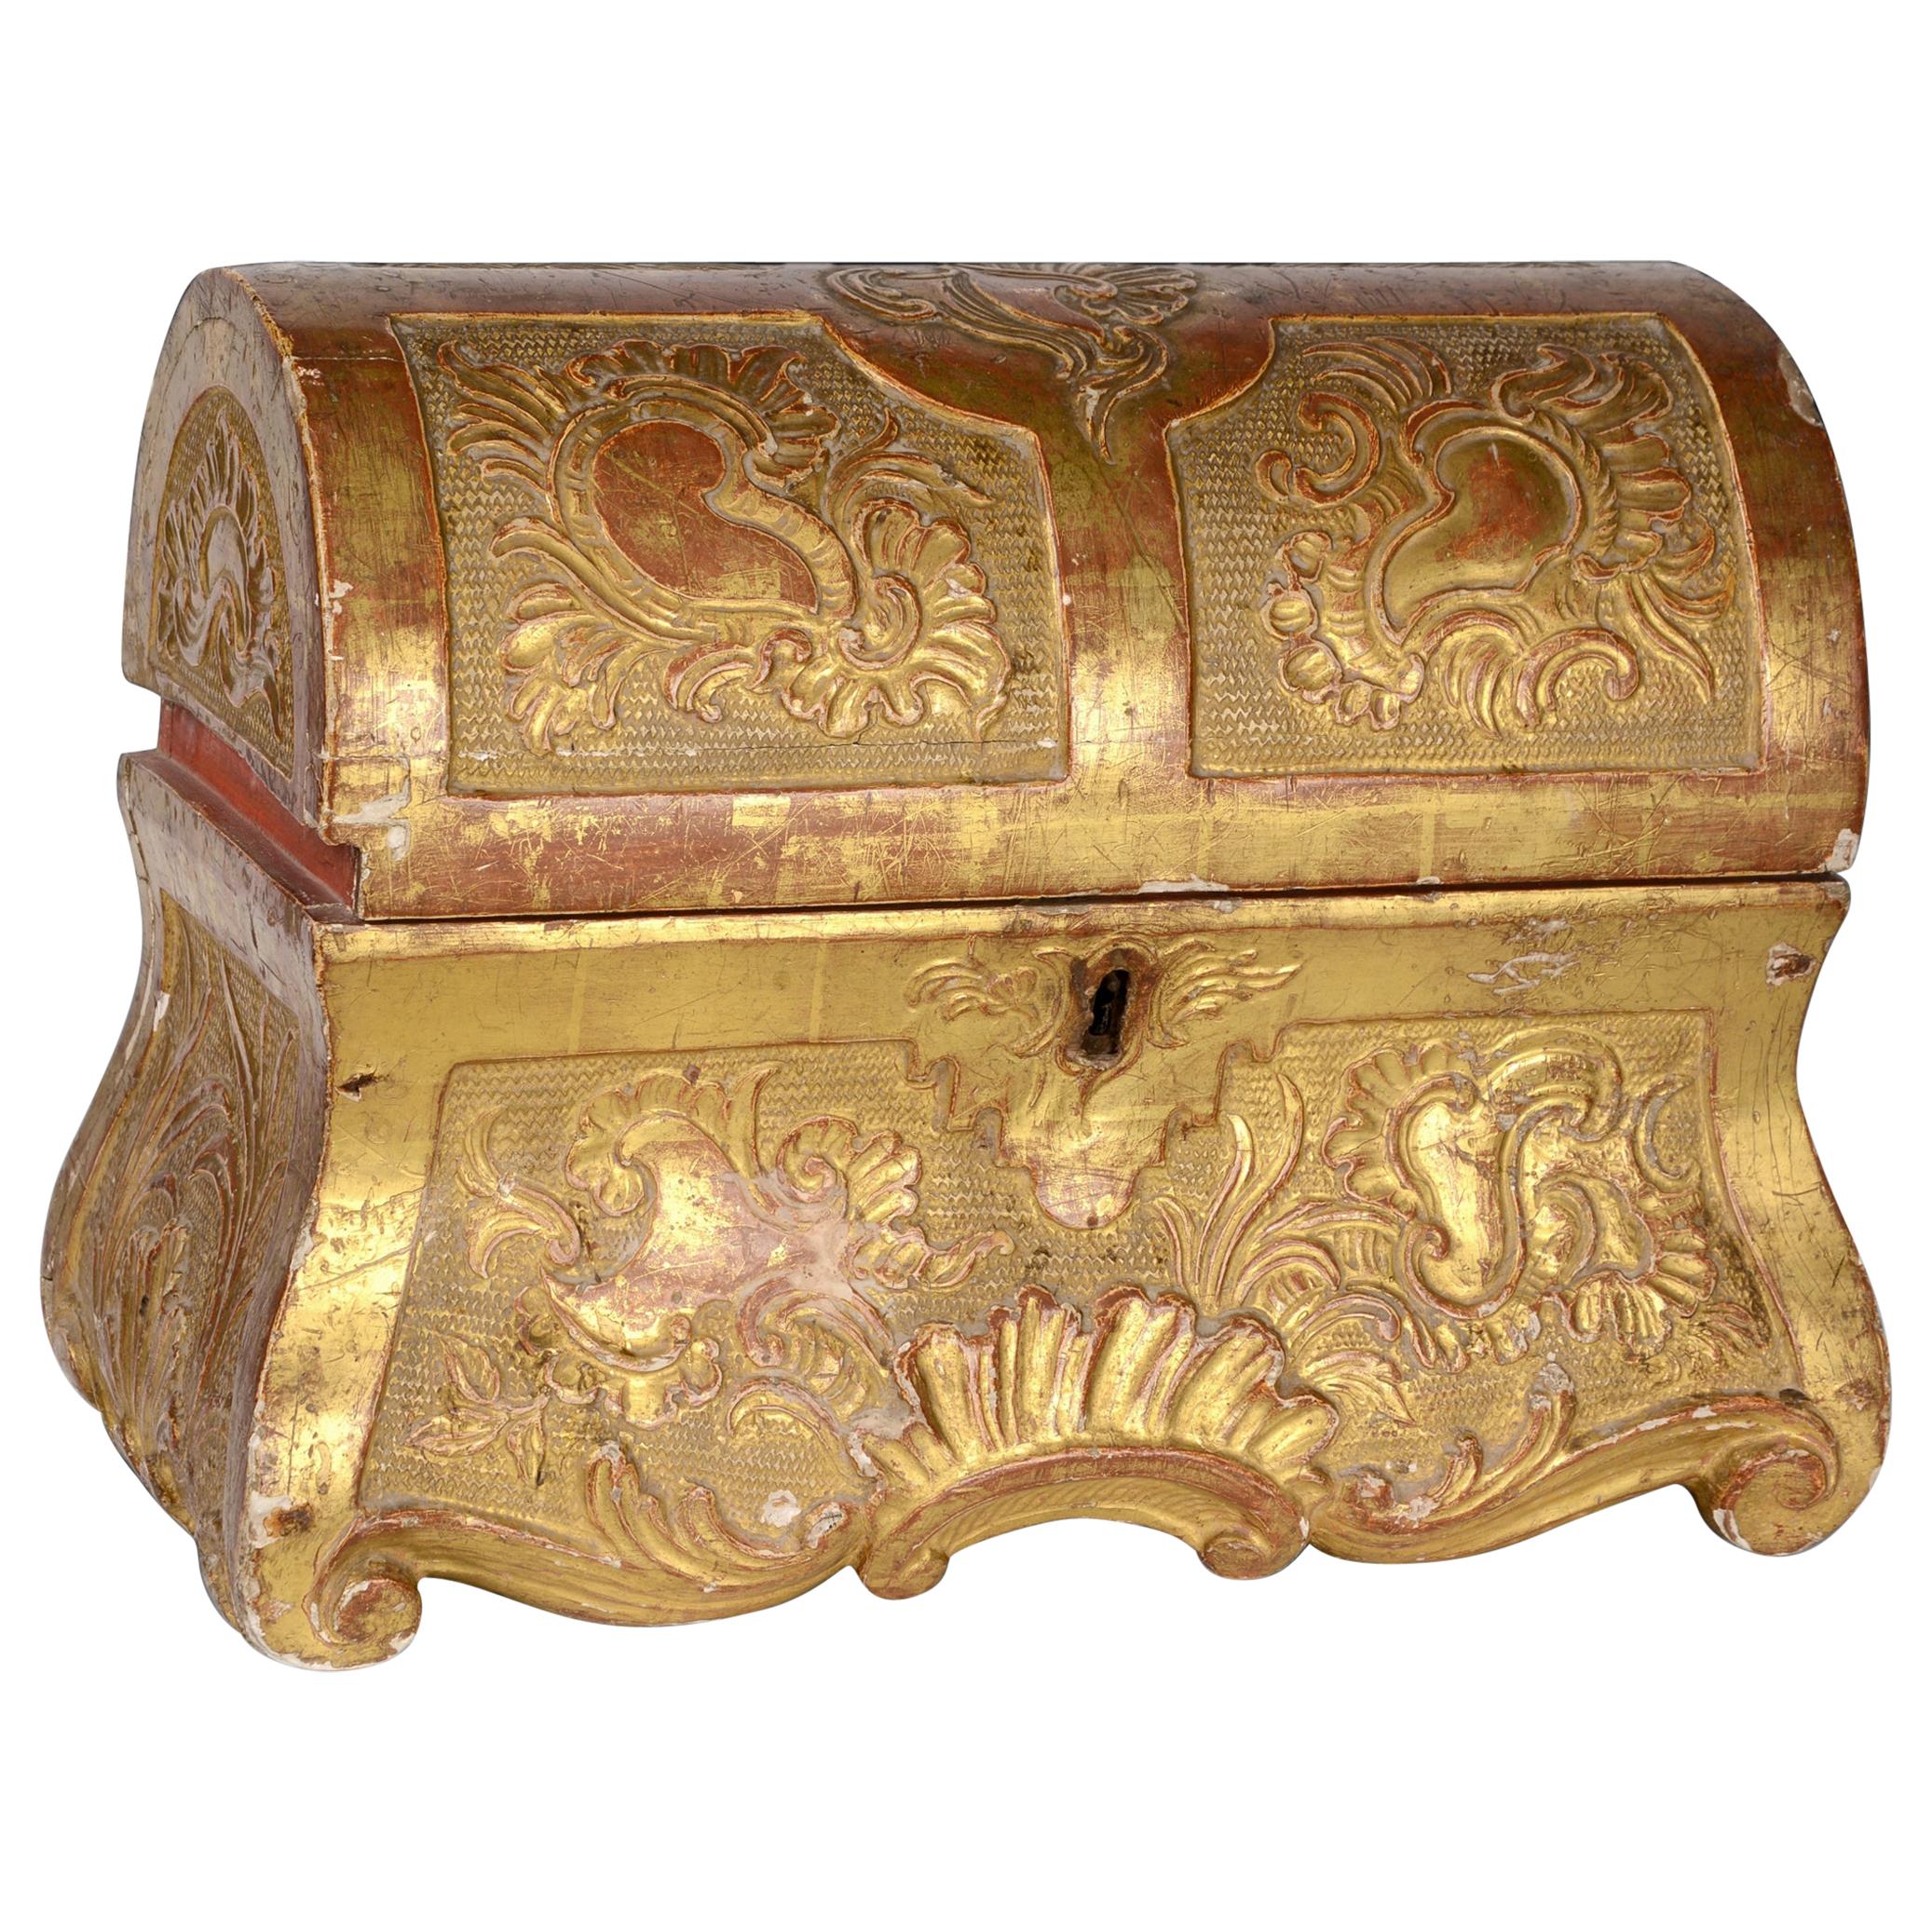 Geschnitzte goldene Rokoko-Holztruhe, 18. Jahrhundert